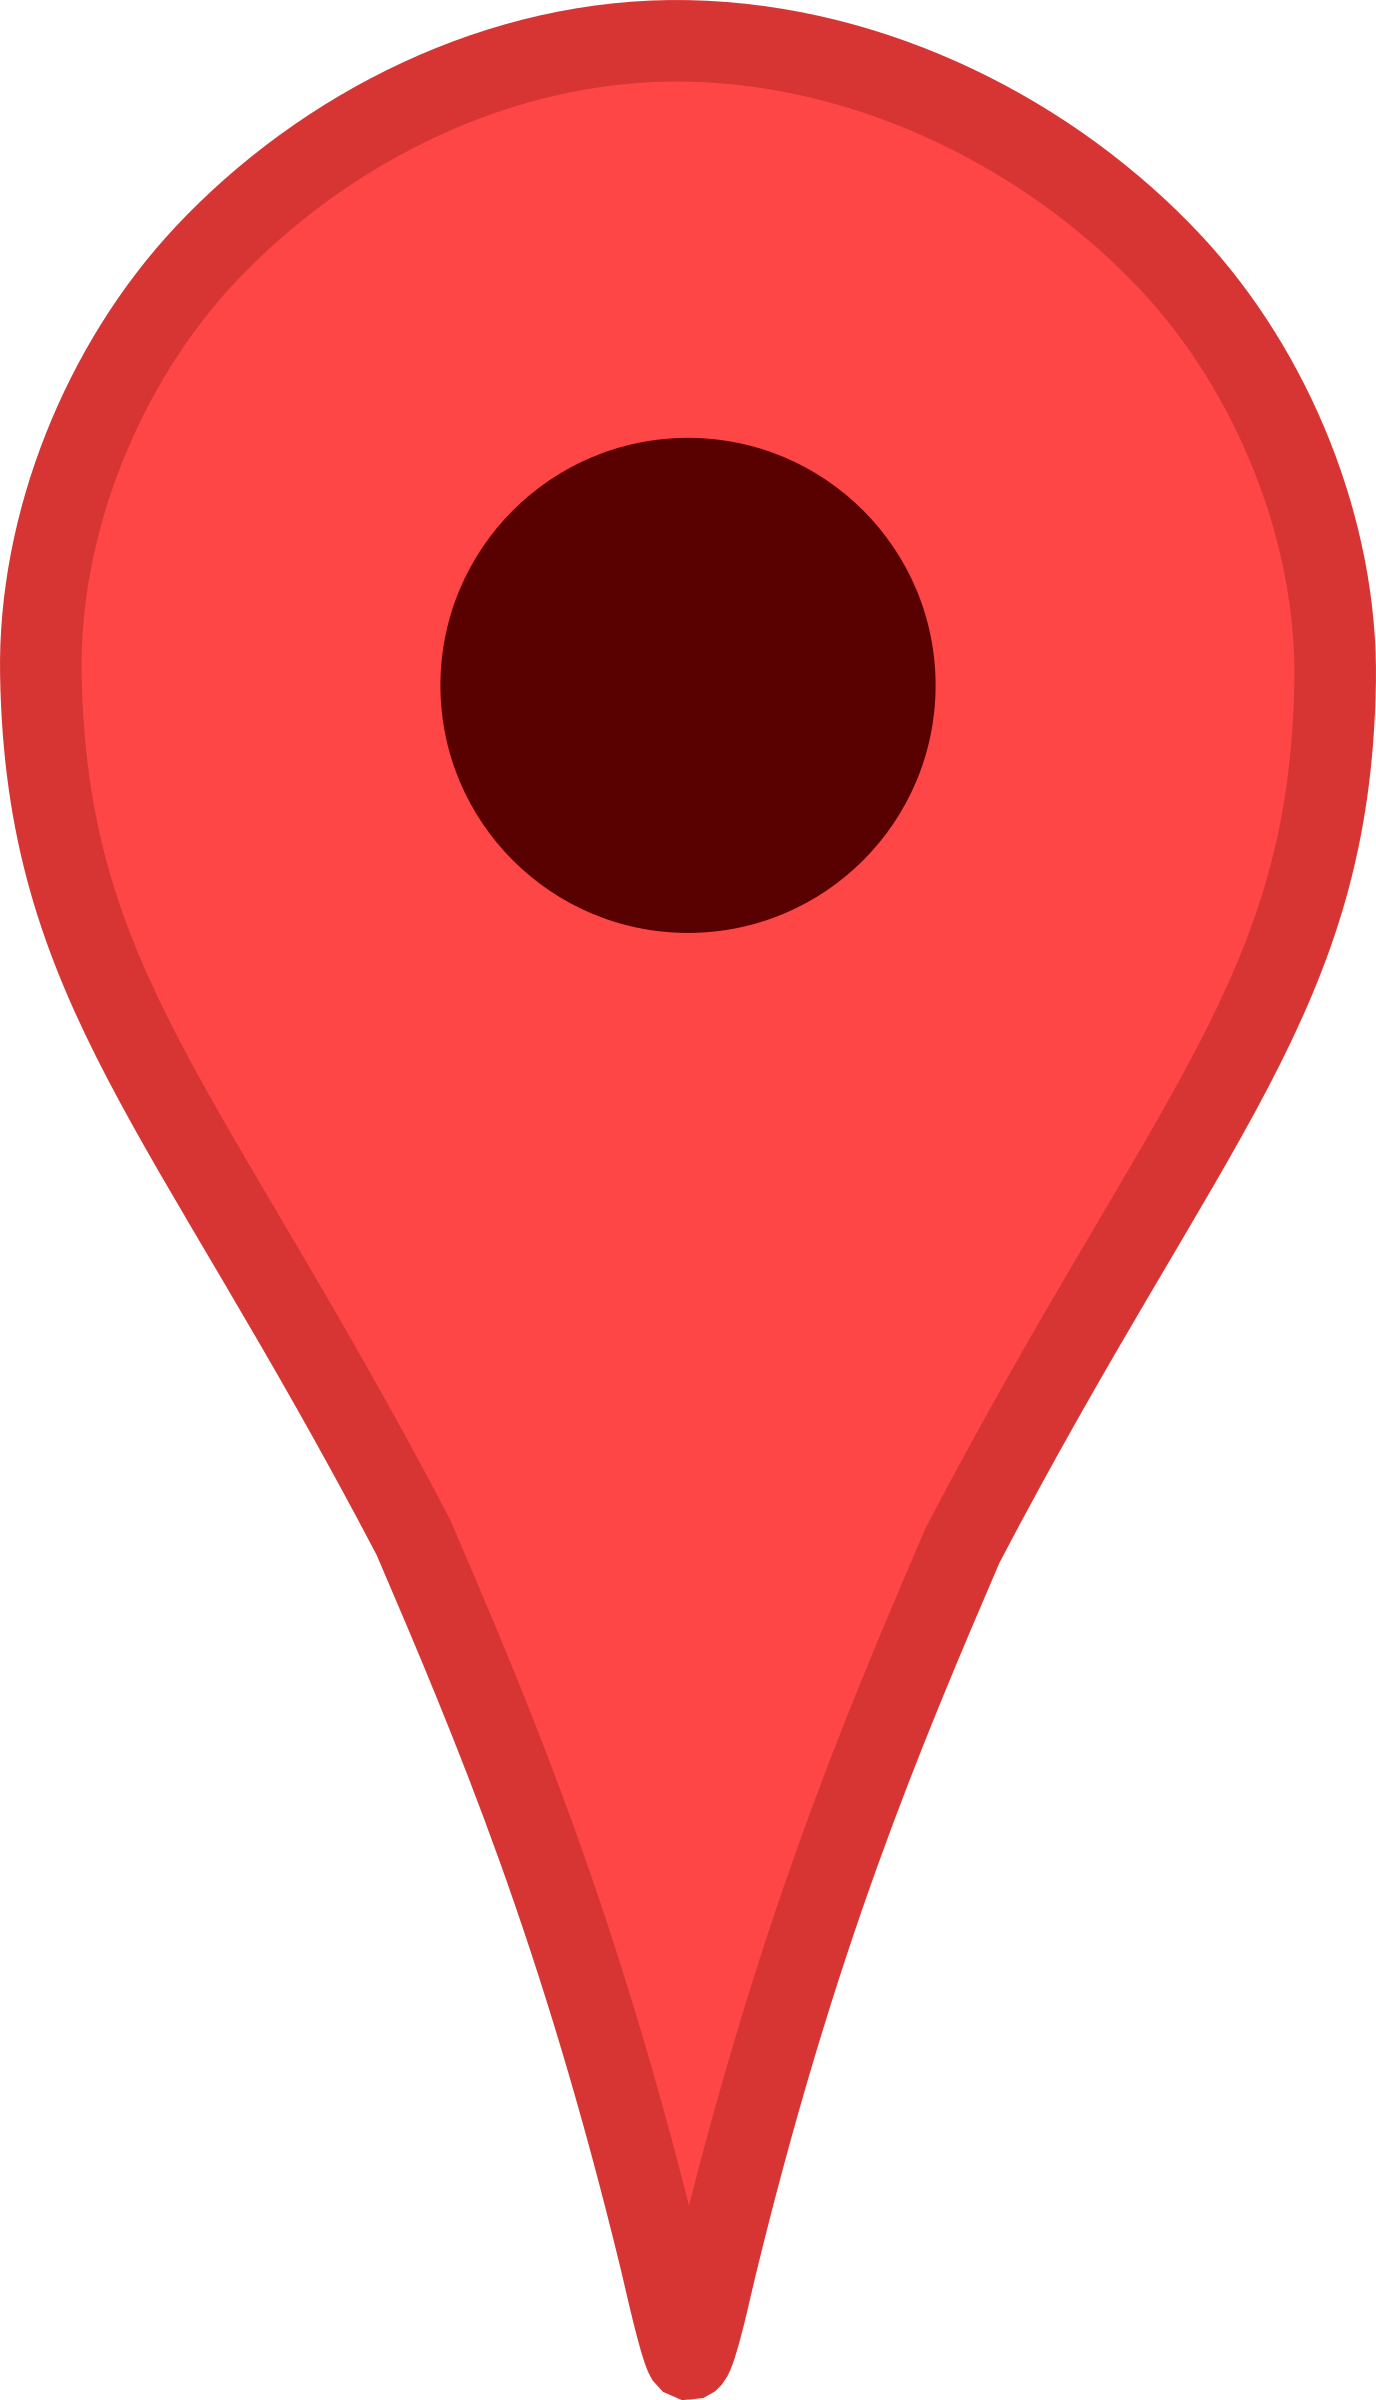 location-map-pin-home-black-svgvectorpublic-domain-icon-park-reverasite